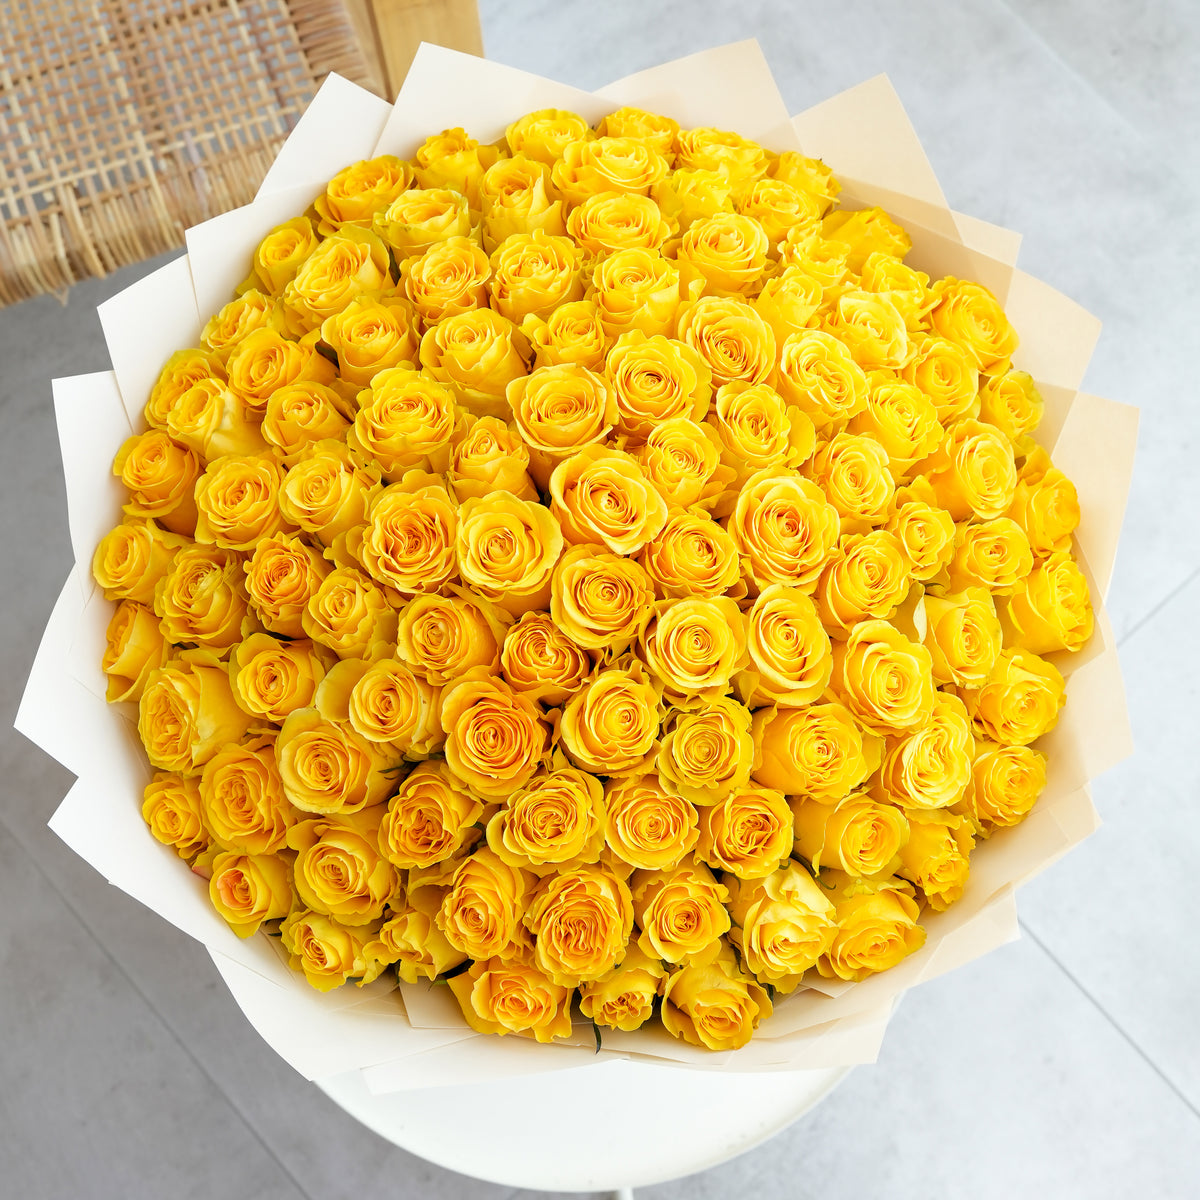 100 Yellow Roses